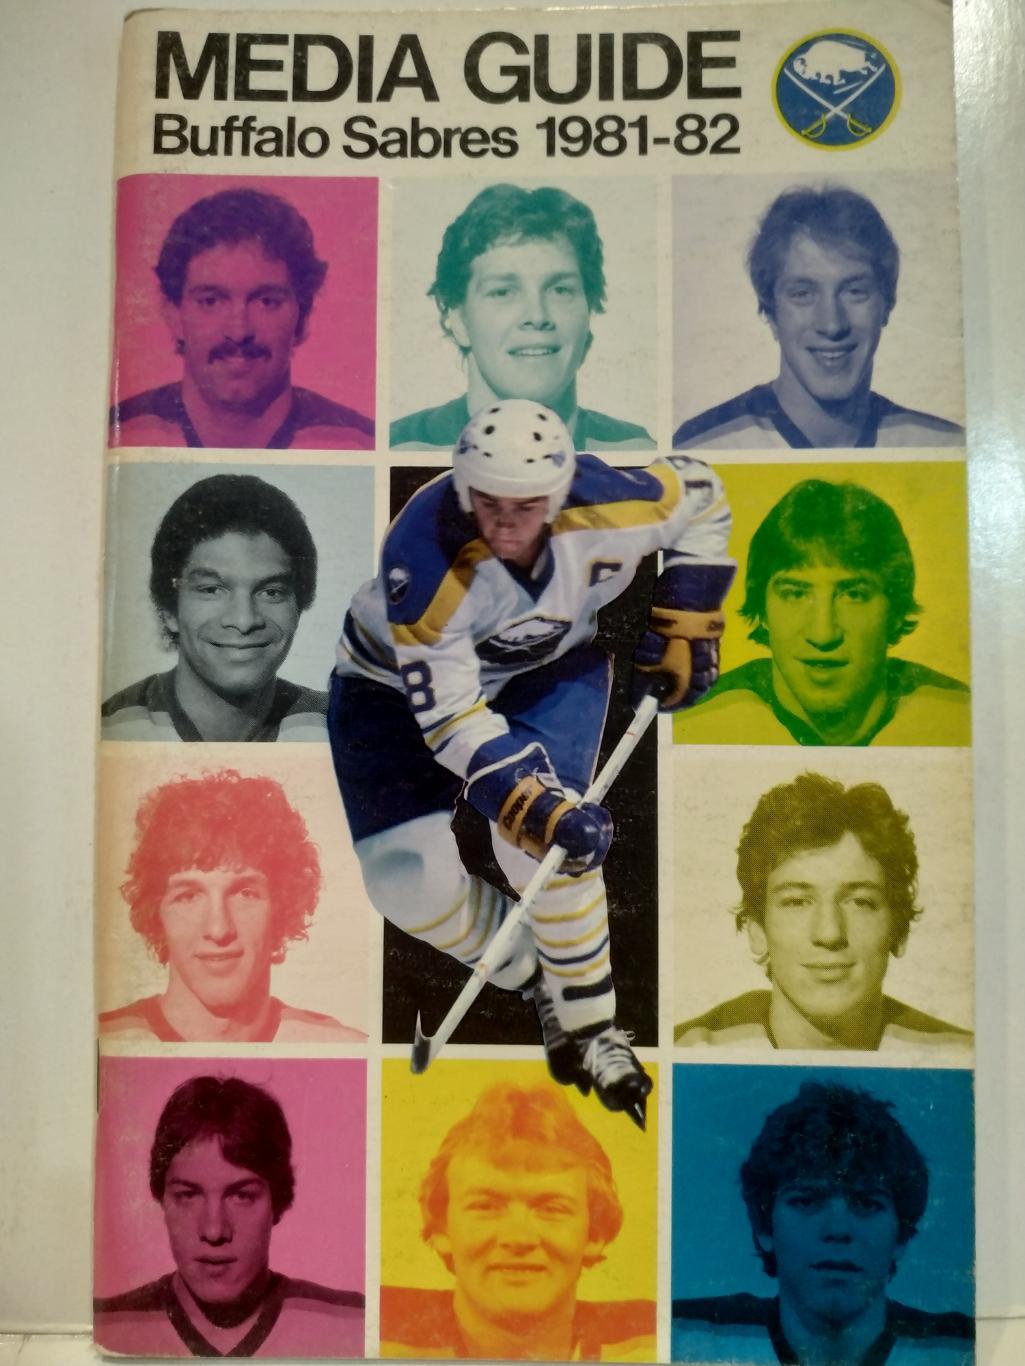 ХОККЕЙ СПРАВОЧНИК ЕЖЕГОДНИК НХЛ БАФФАЛО 1981-82 BUFFALO SABRES MEDIA GUIDE